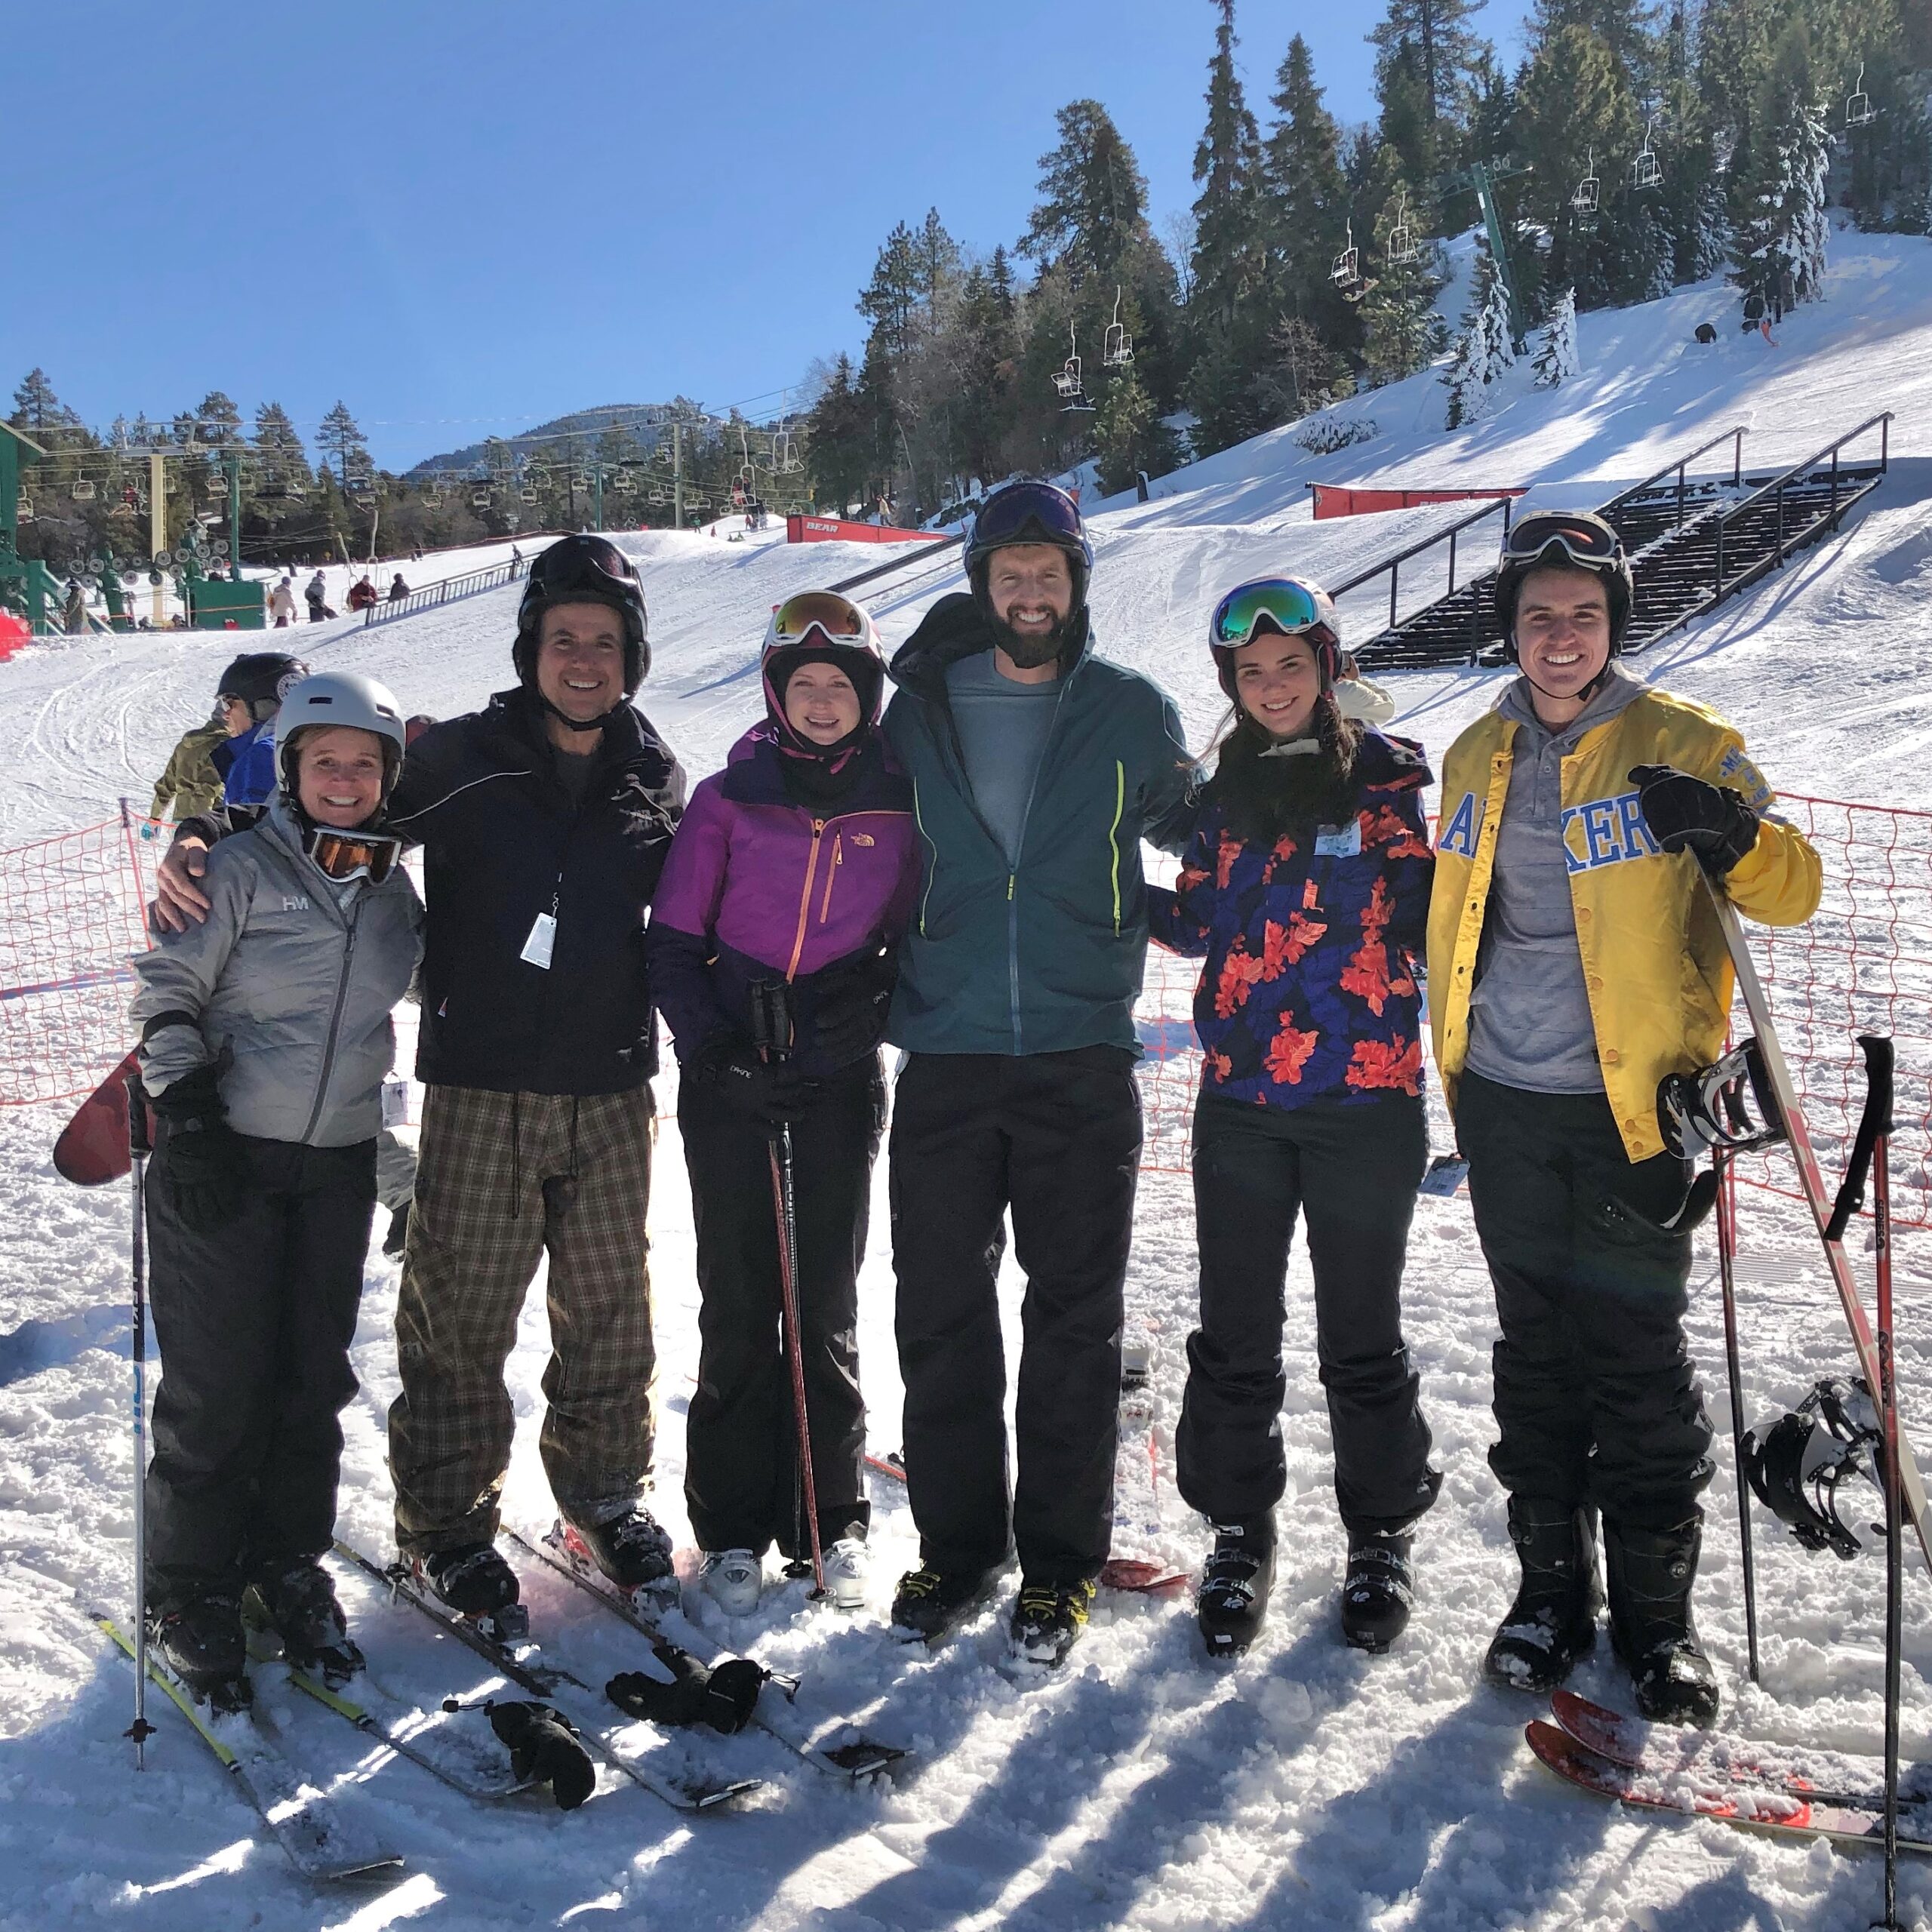 Ed Muna skiing with teammates